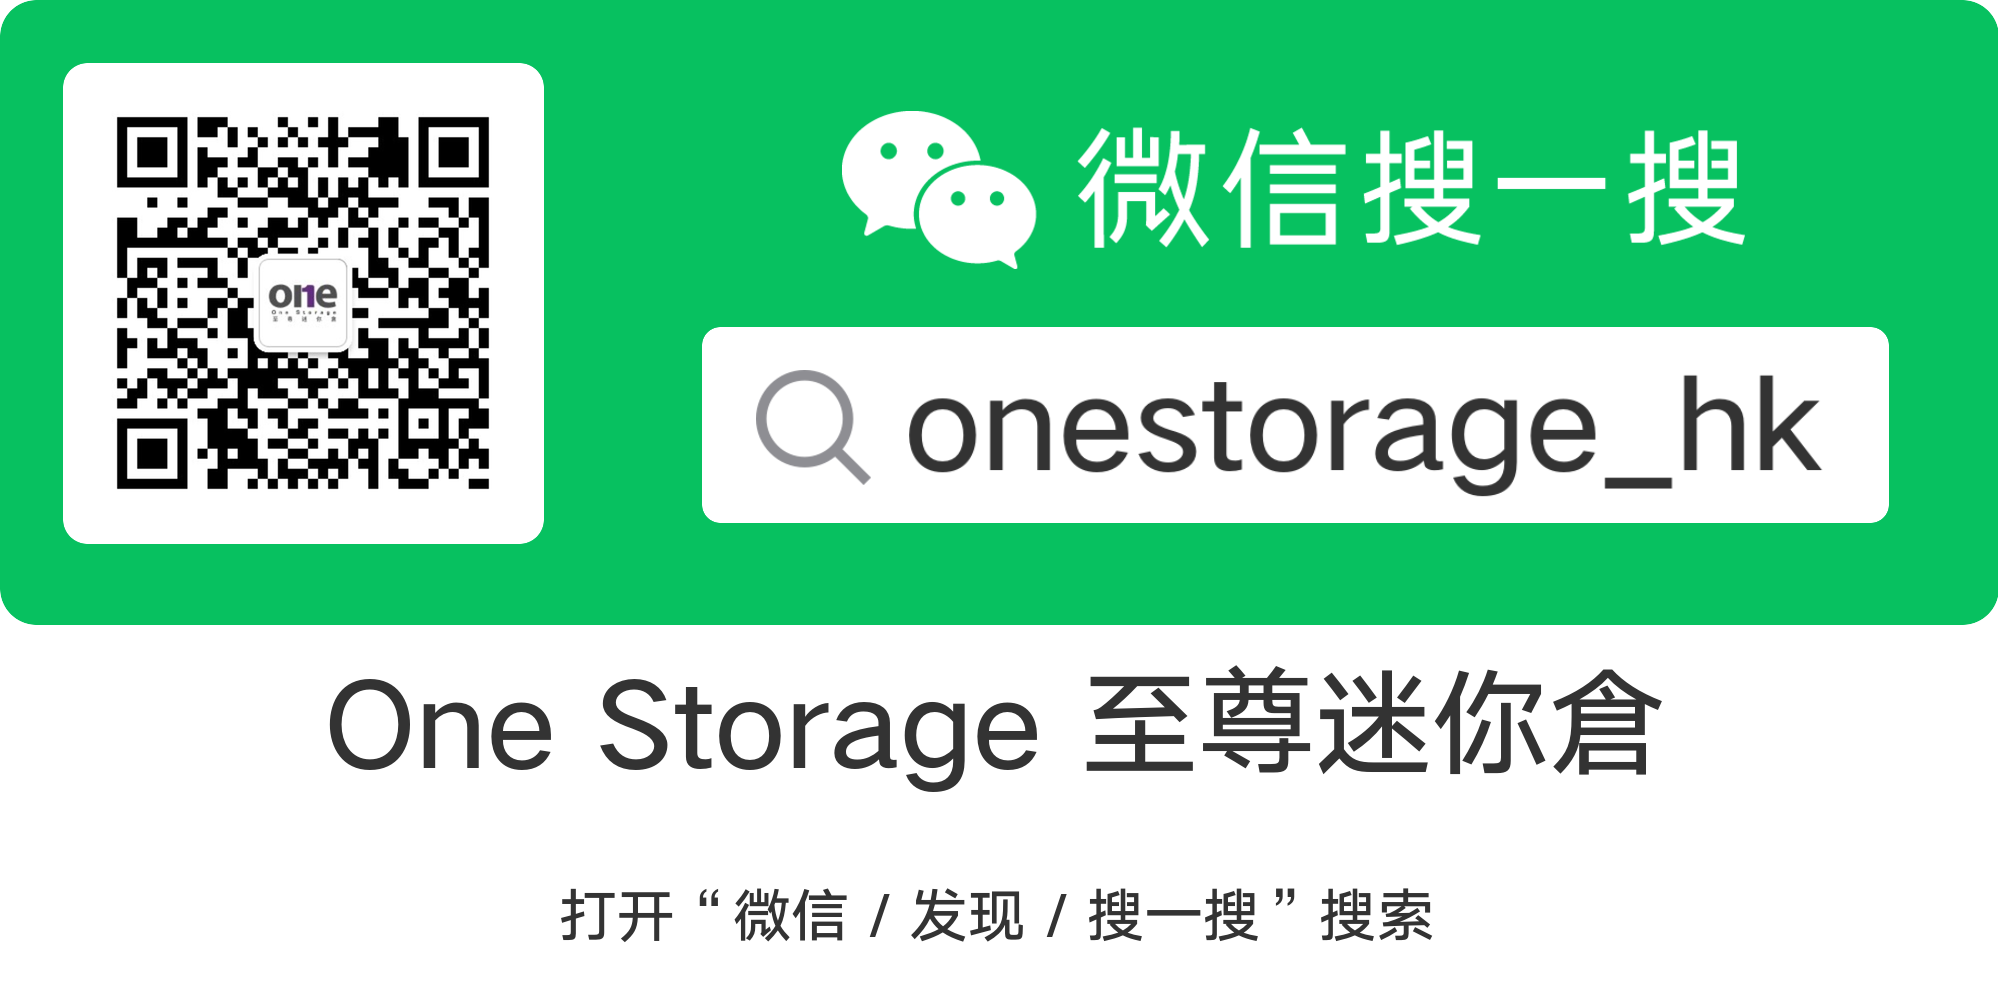 One Storage至尊迷你倉微信公眾號